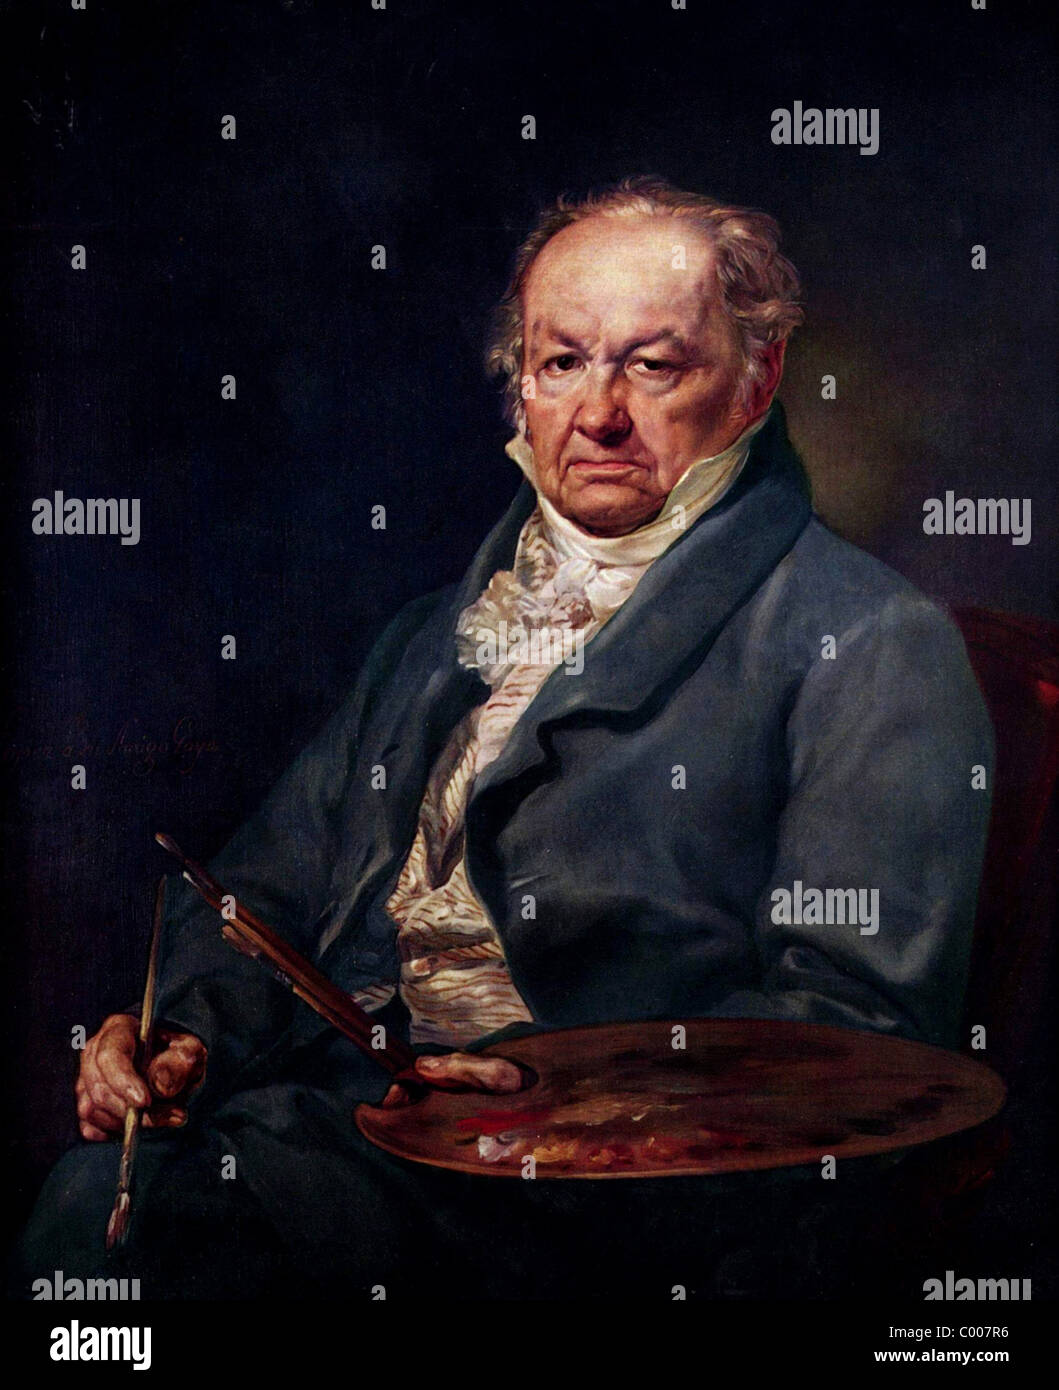 Francisco Goya, painter and artist Stock Photo